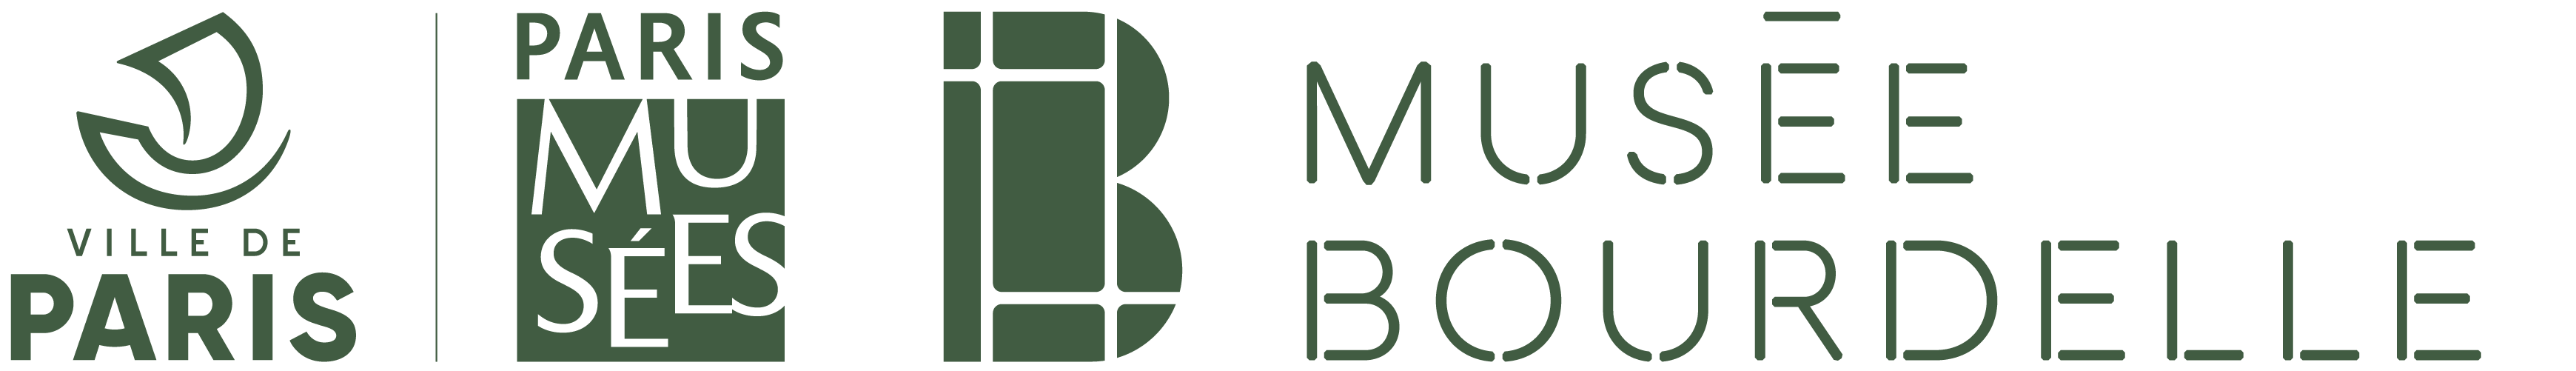 Logo du Musée Bourdelle